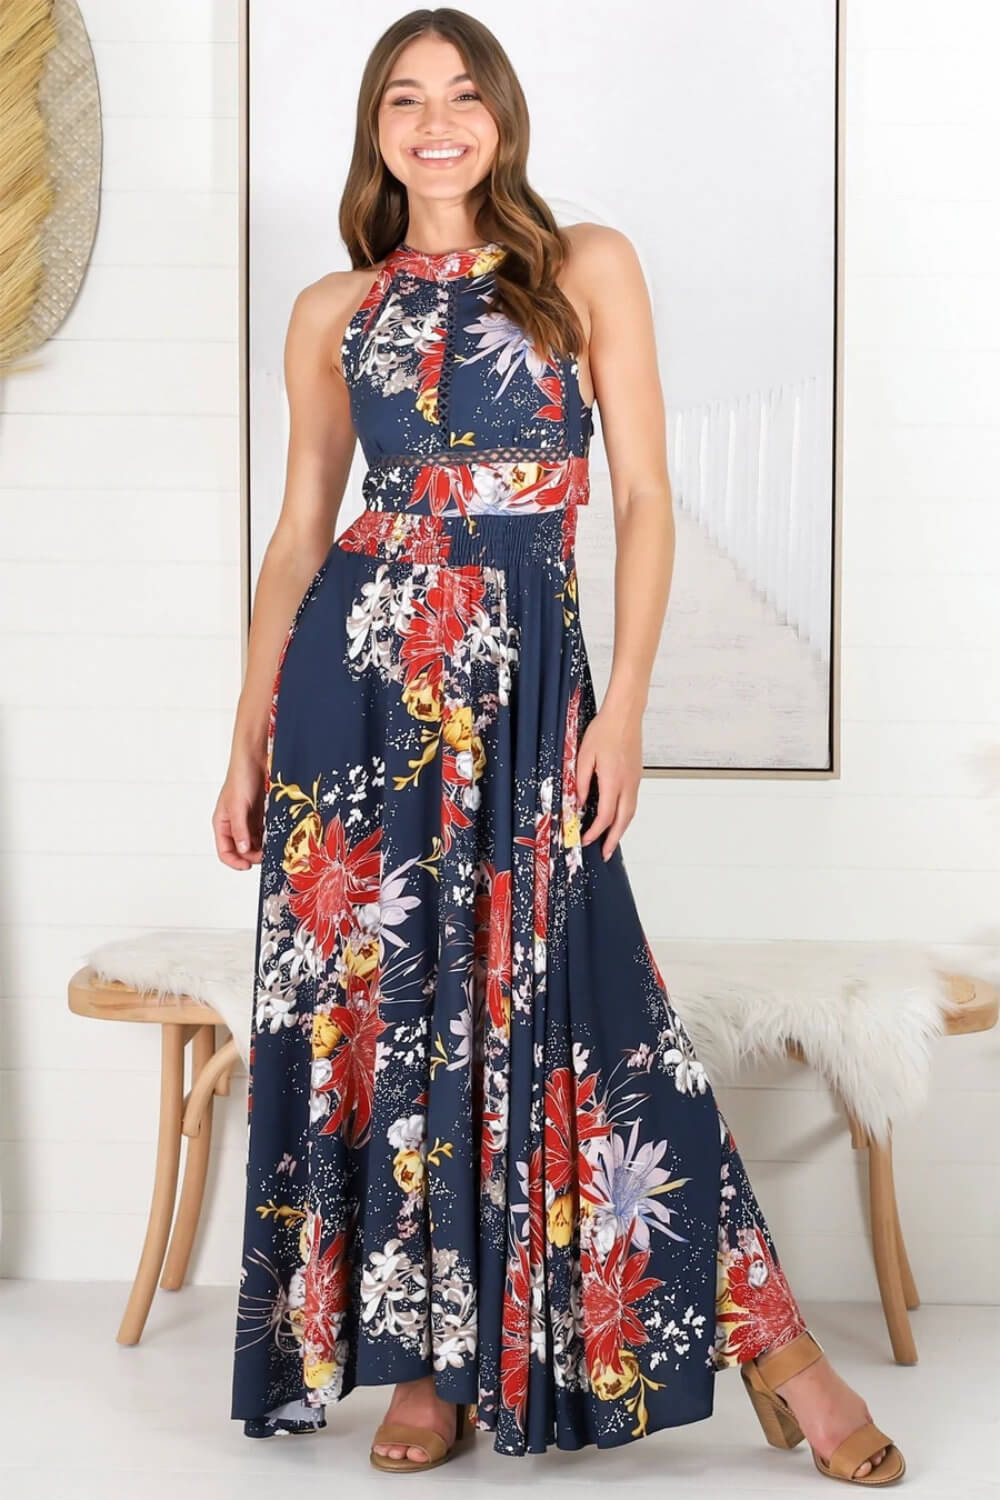 Sophisticated Honeymoon Dresses Classy Honeymoon Outfits Navy Floral Print Maxi Dress 3